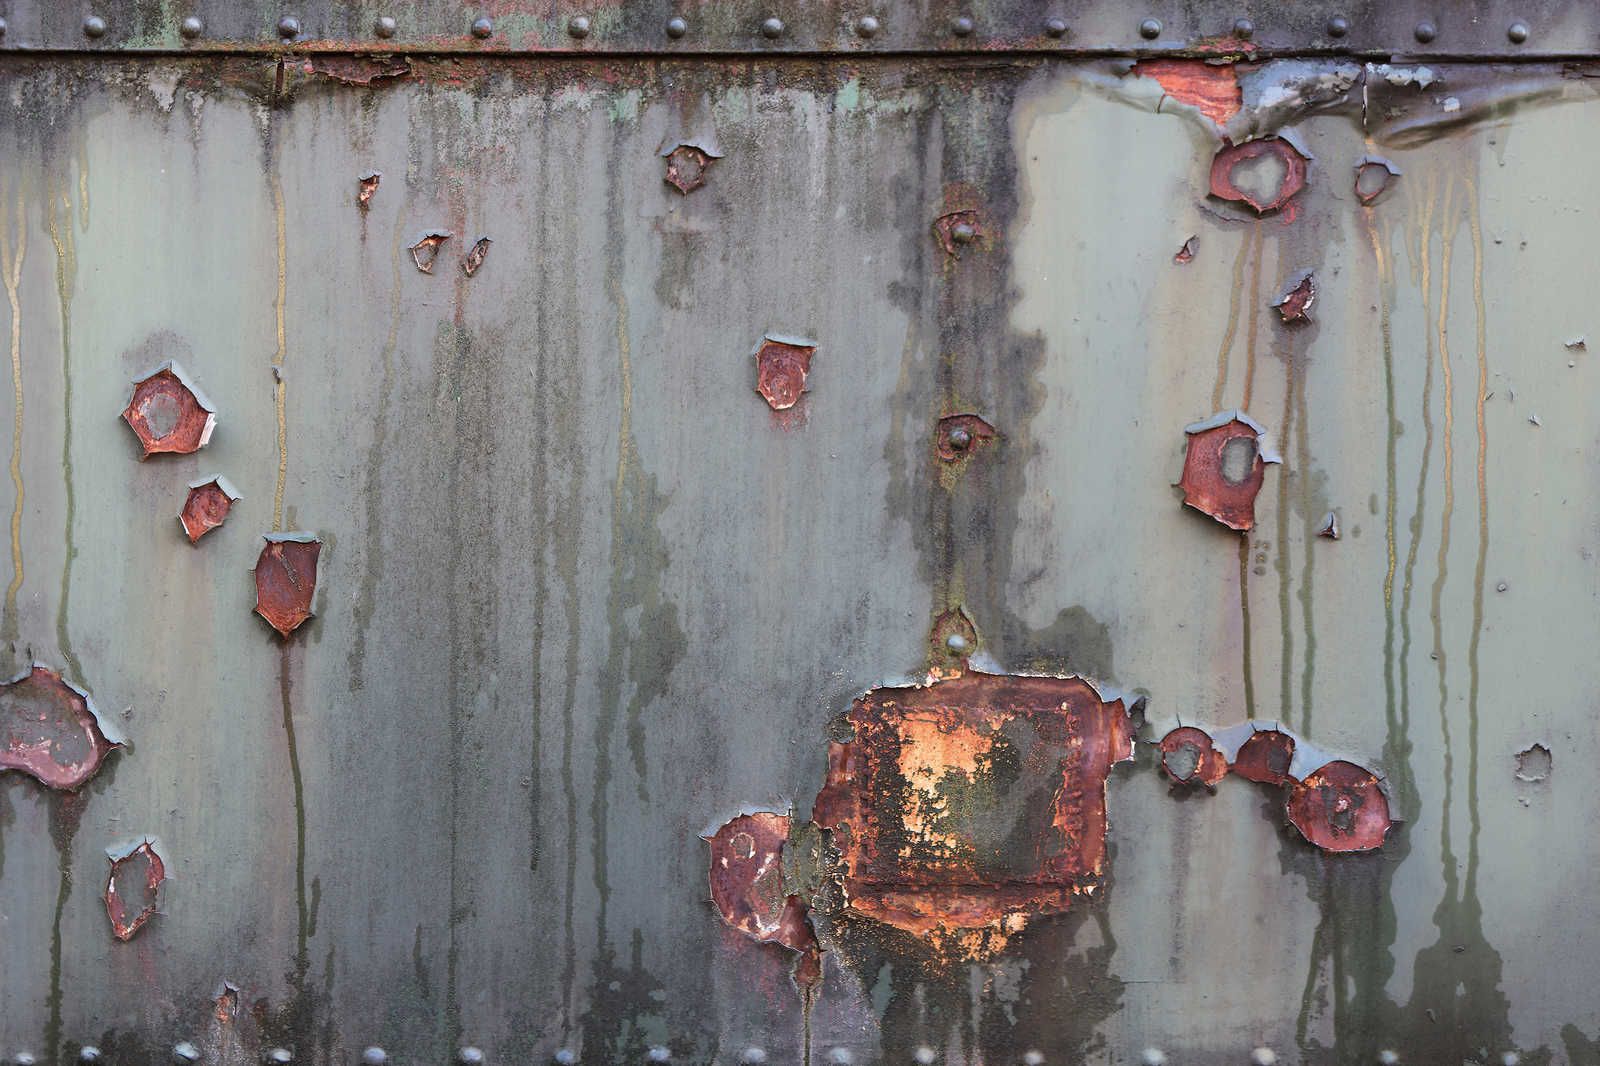             Metallwand - Leinwandbild Industrial mit Rost & Used Look – 0,90 m x 0,60 m
        